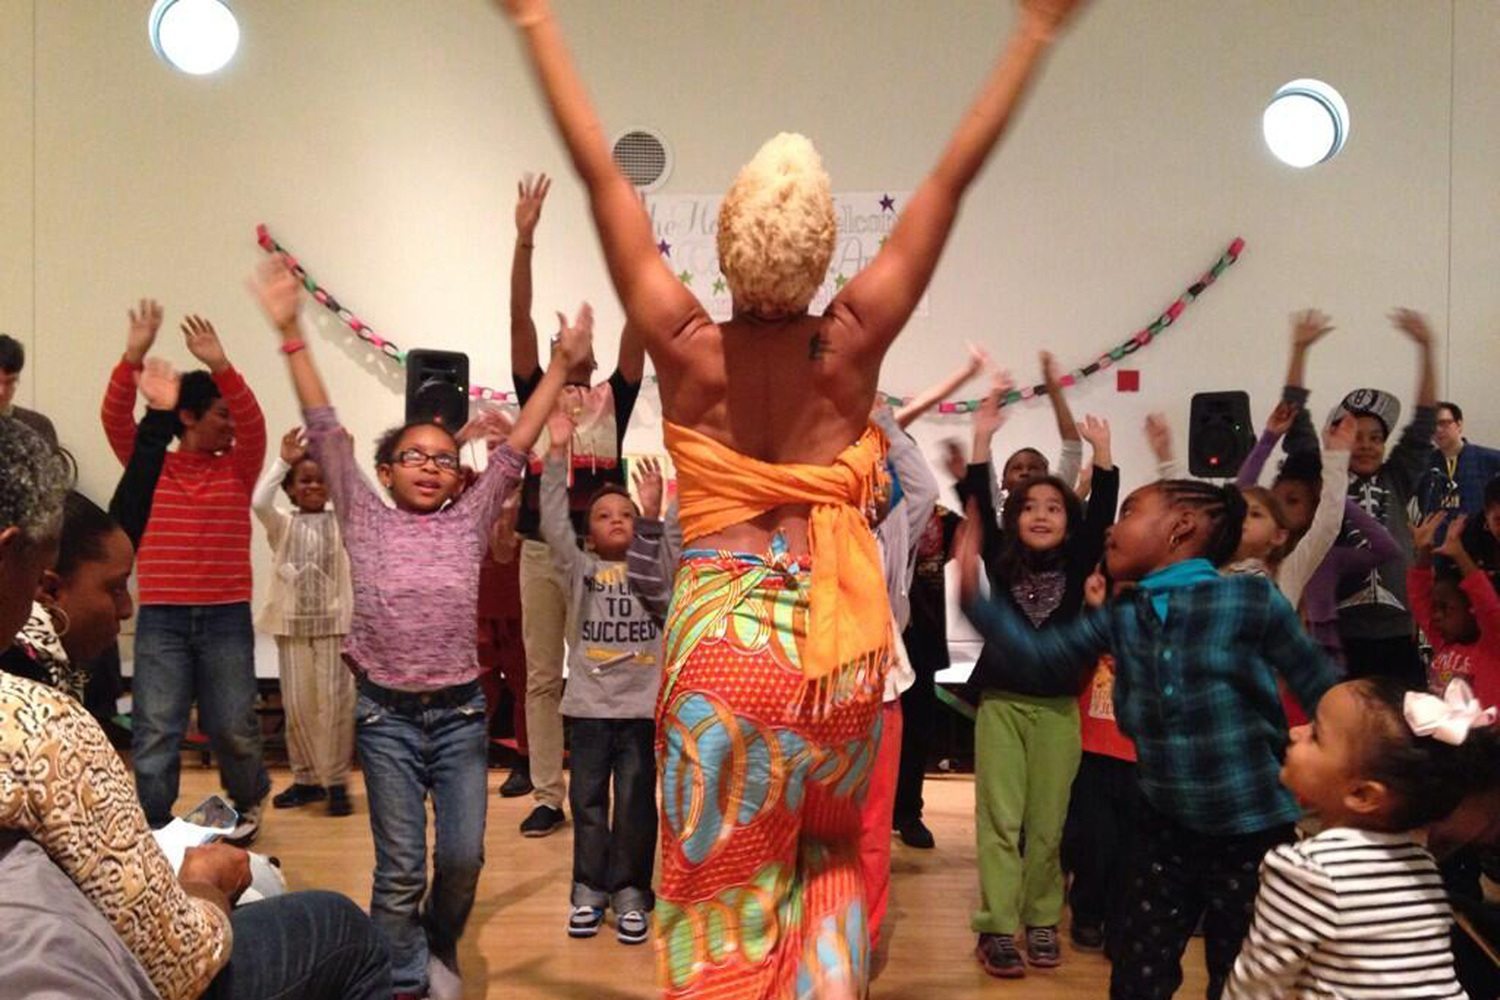 Celebrate Kwanzaa! at the Brooklyn Children's Museum 